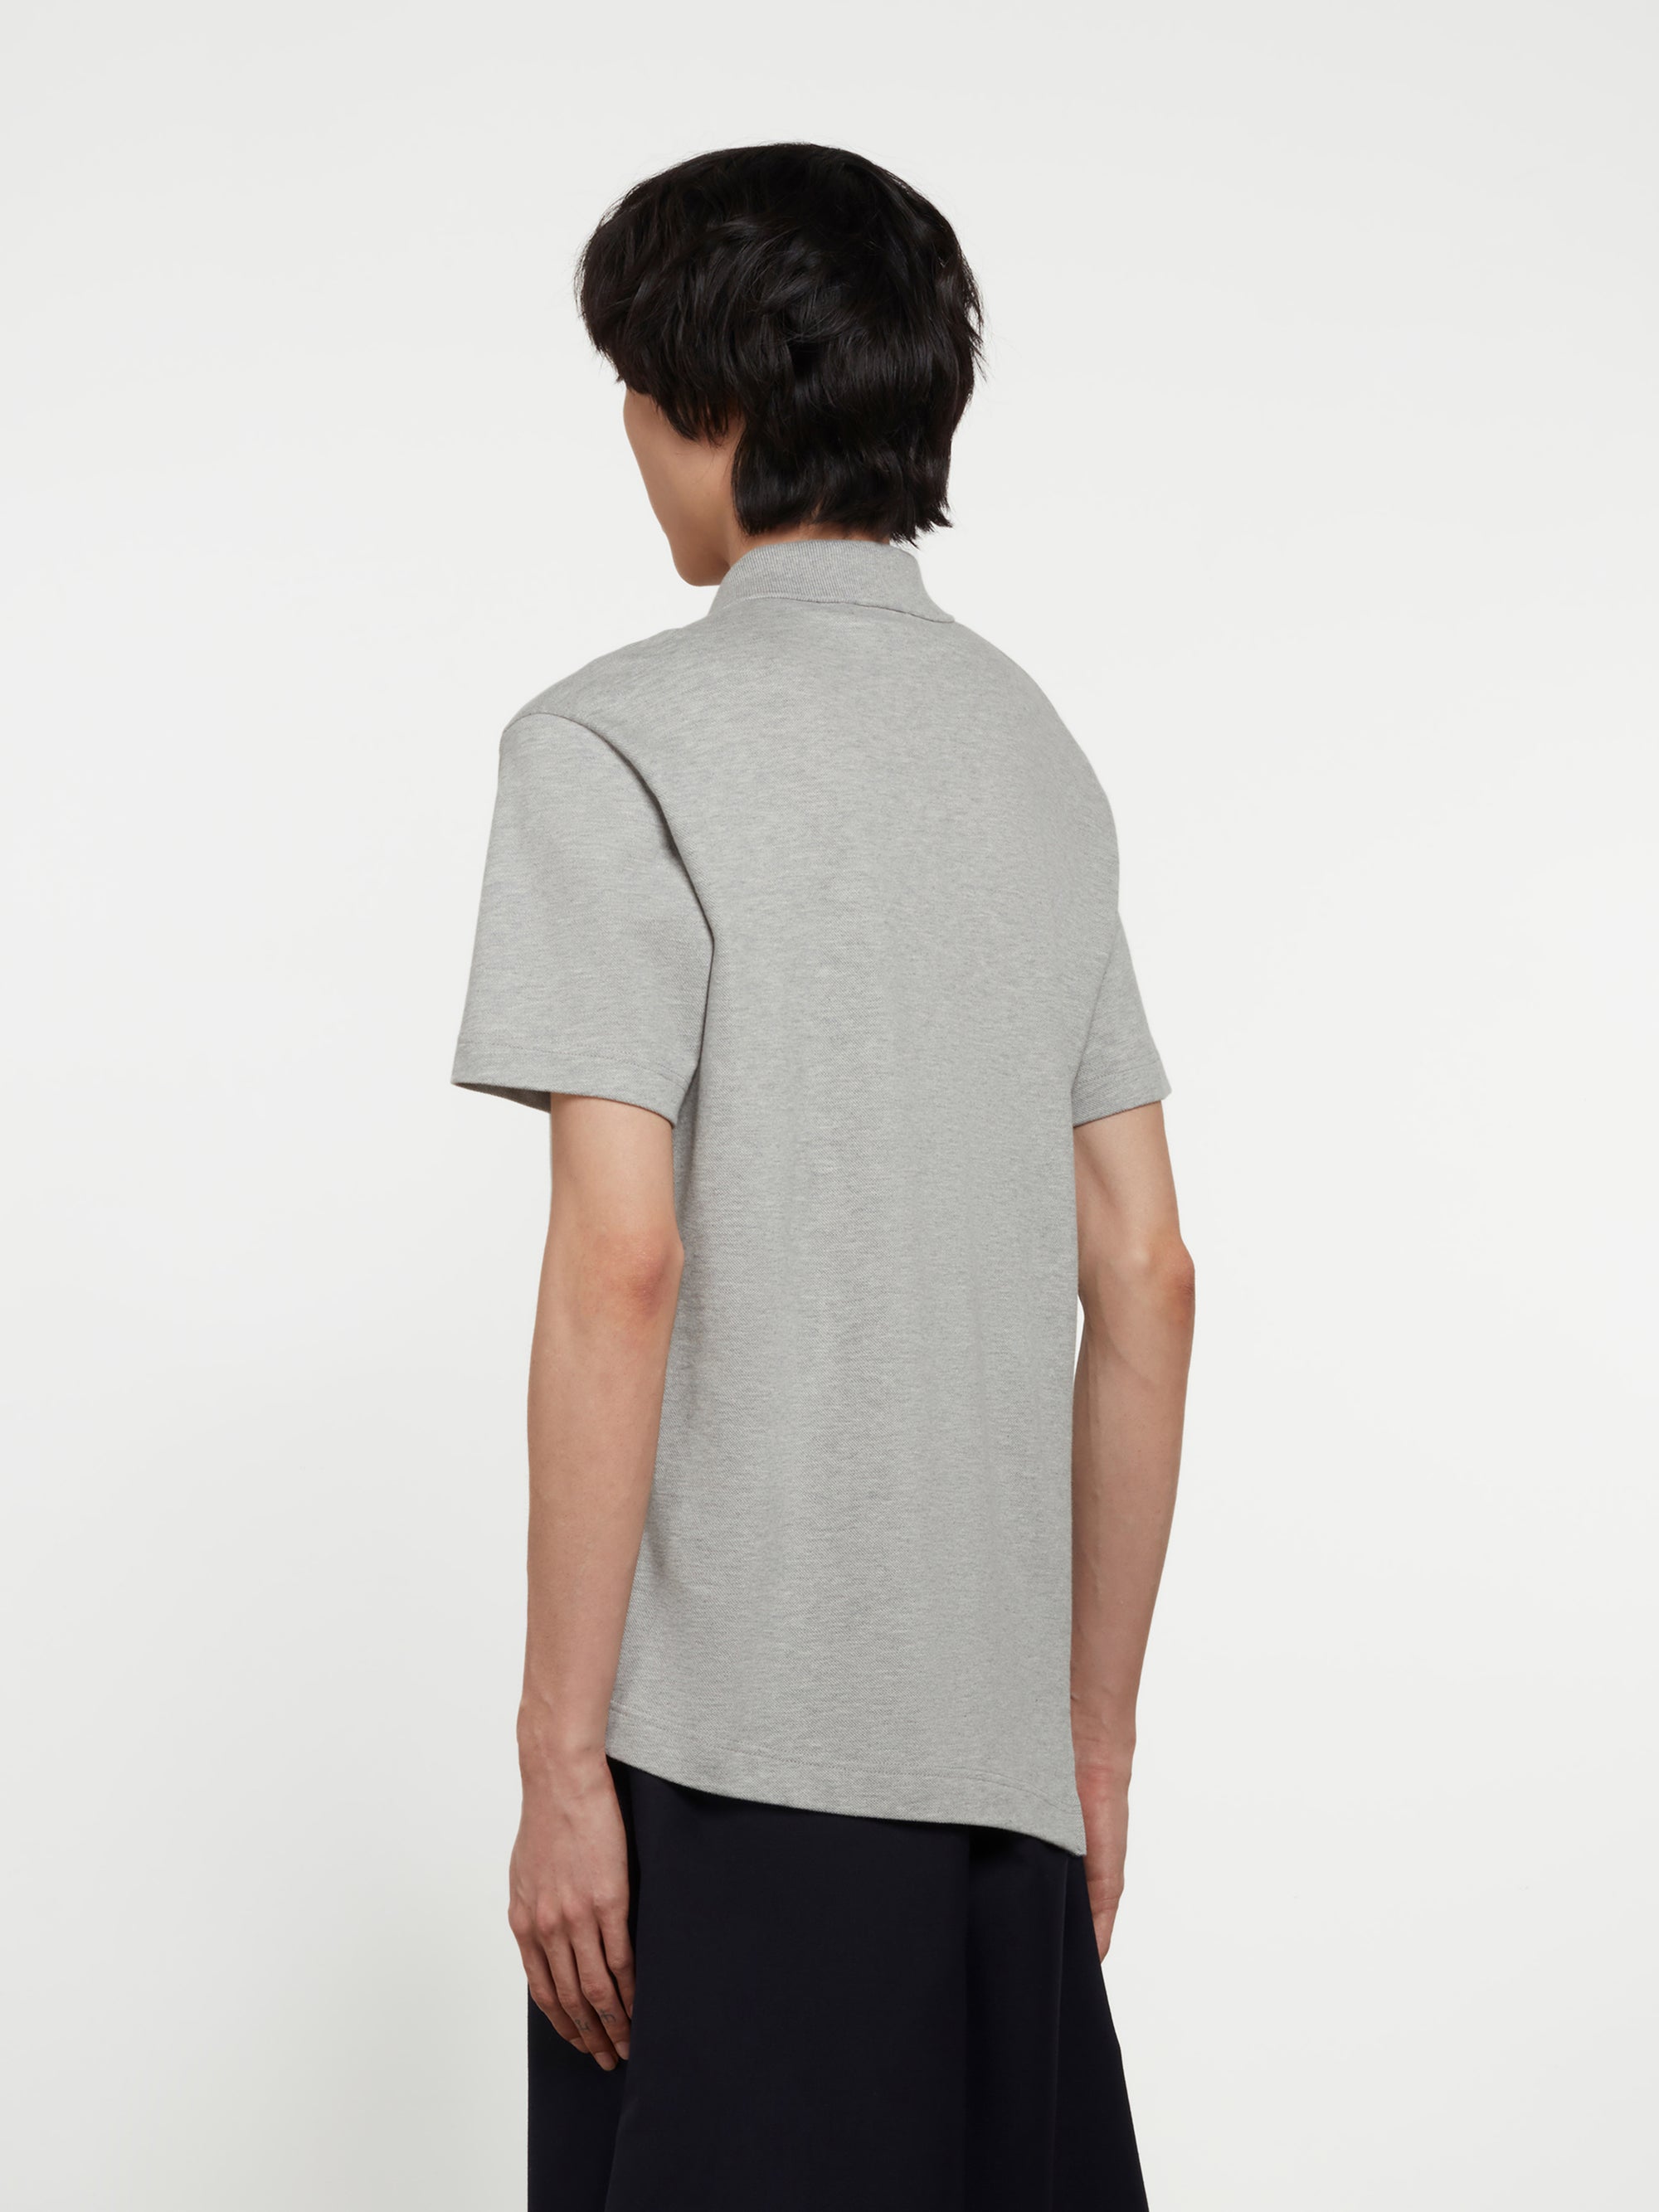 CDG Shirt - Lacoste Men's Asymmetric Polo Shirt - (Grey) view 3